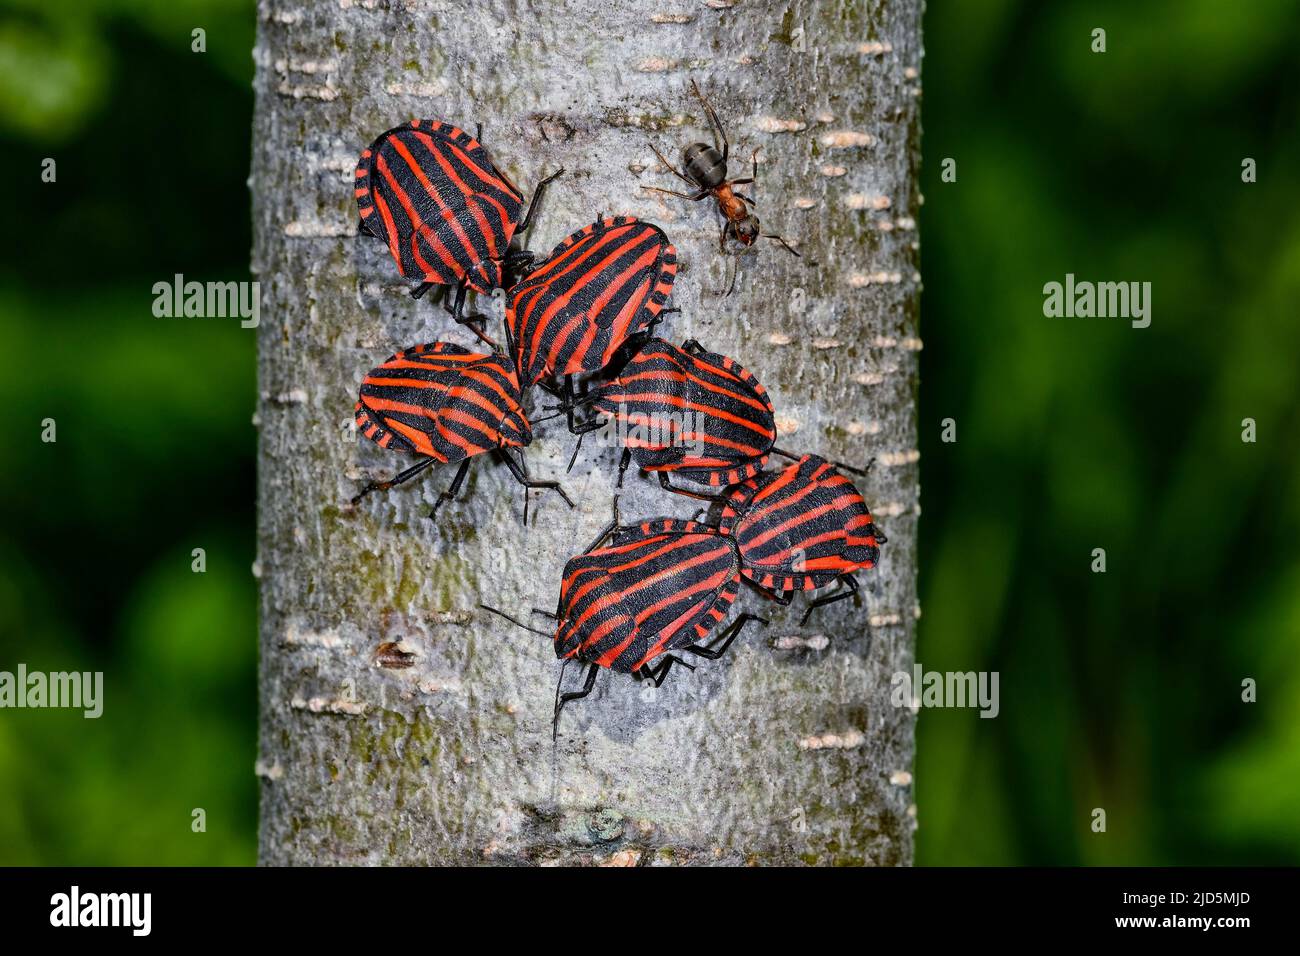 Striped bugs congregate Stock Photo